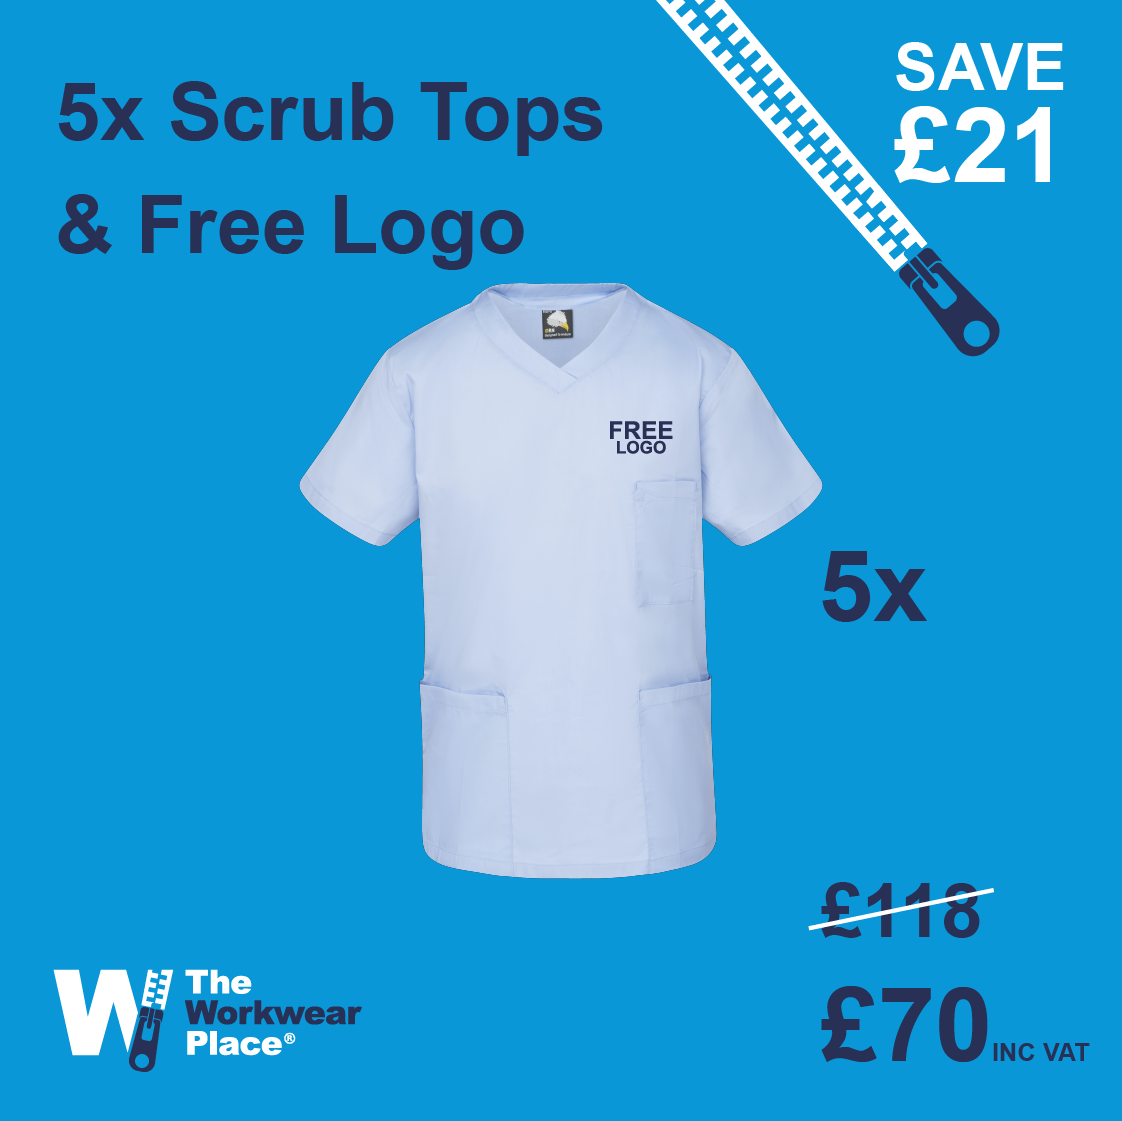 5x Scrub Tops & Free Logo